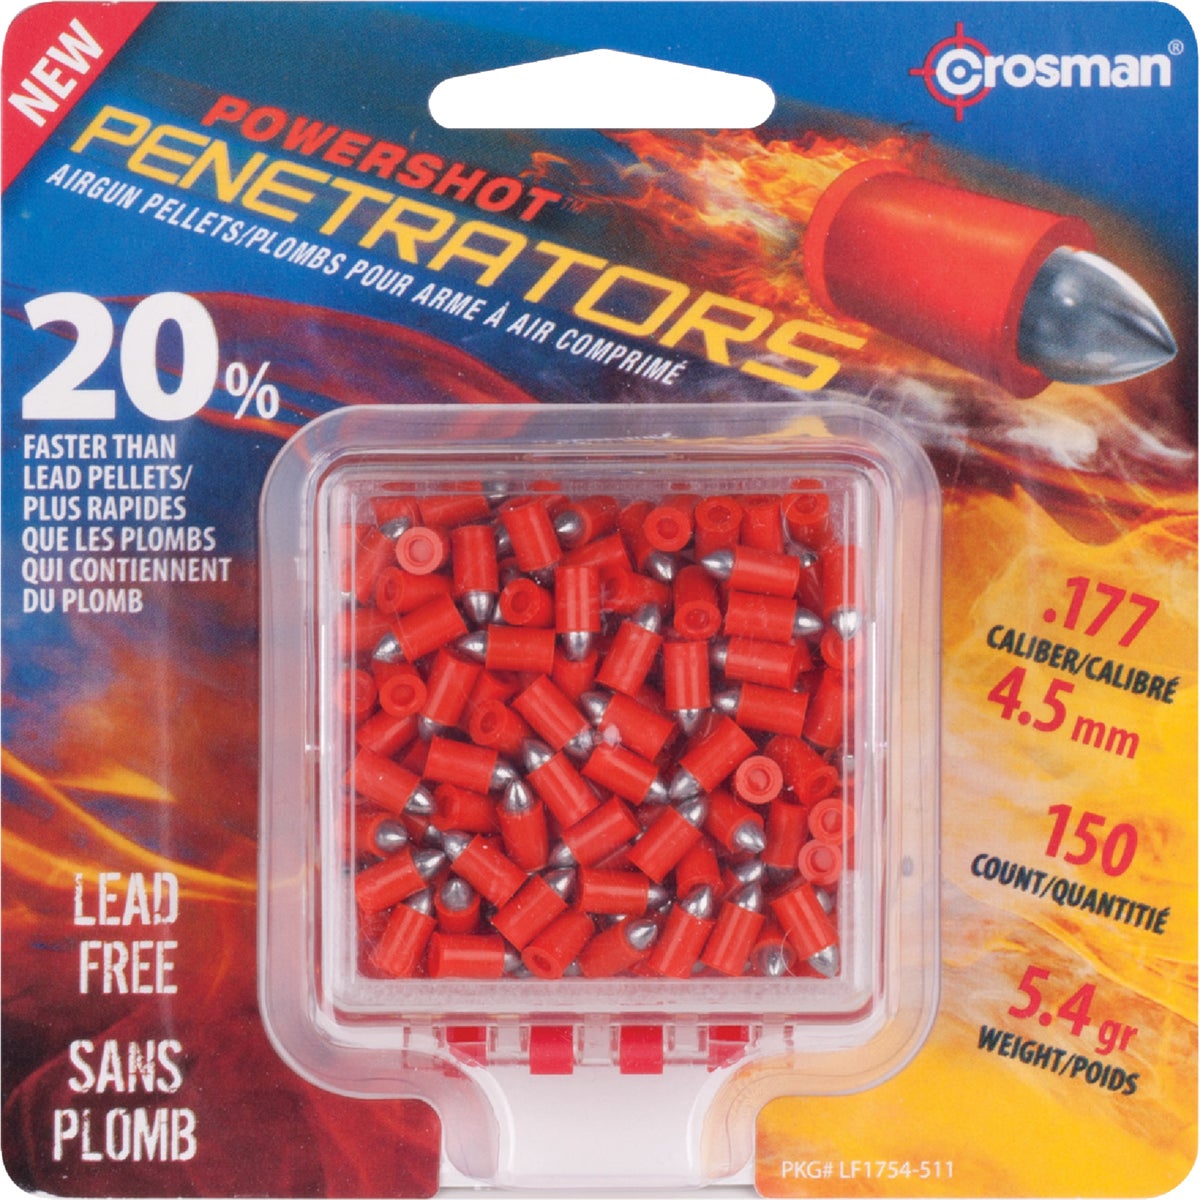 Crosman PowerShot Penetrators .177 Cal. Pointed 5.4 Grain Pellet Ammunition (150-Pack)